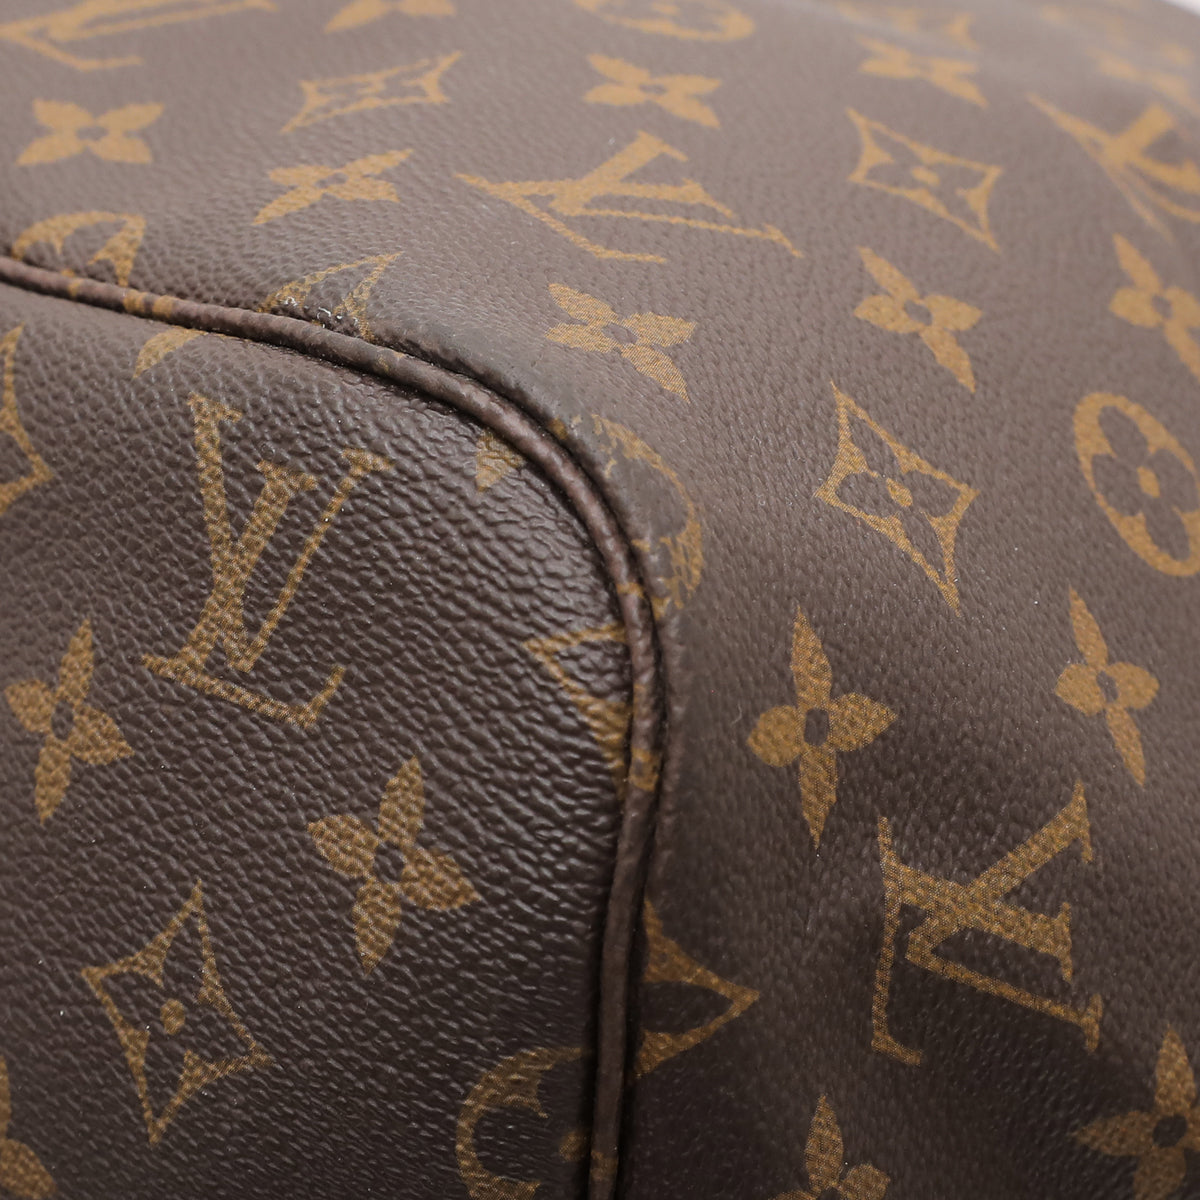 Louis Vuitton Brown Monogram Neverfull GM Bag